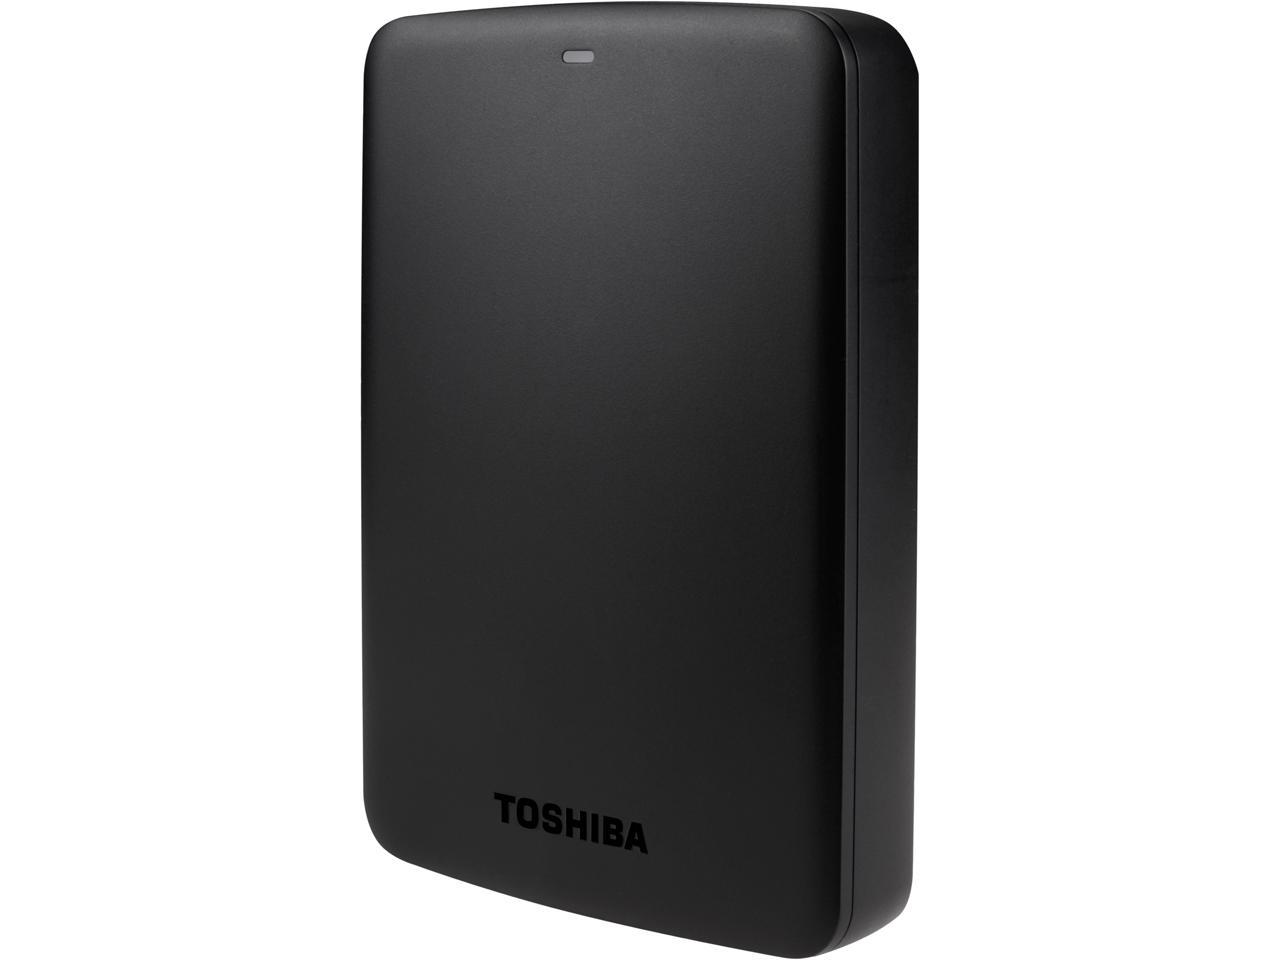 Toshiba Canvio Basics 3Tb Portable External Hard Drive Usb 3.0 Black - Hdtb330Xk3Cb